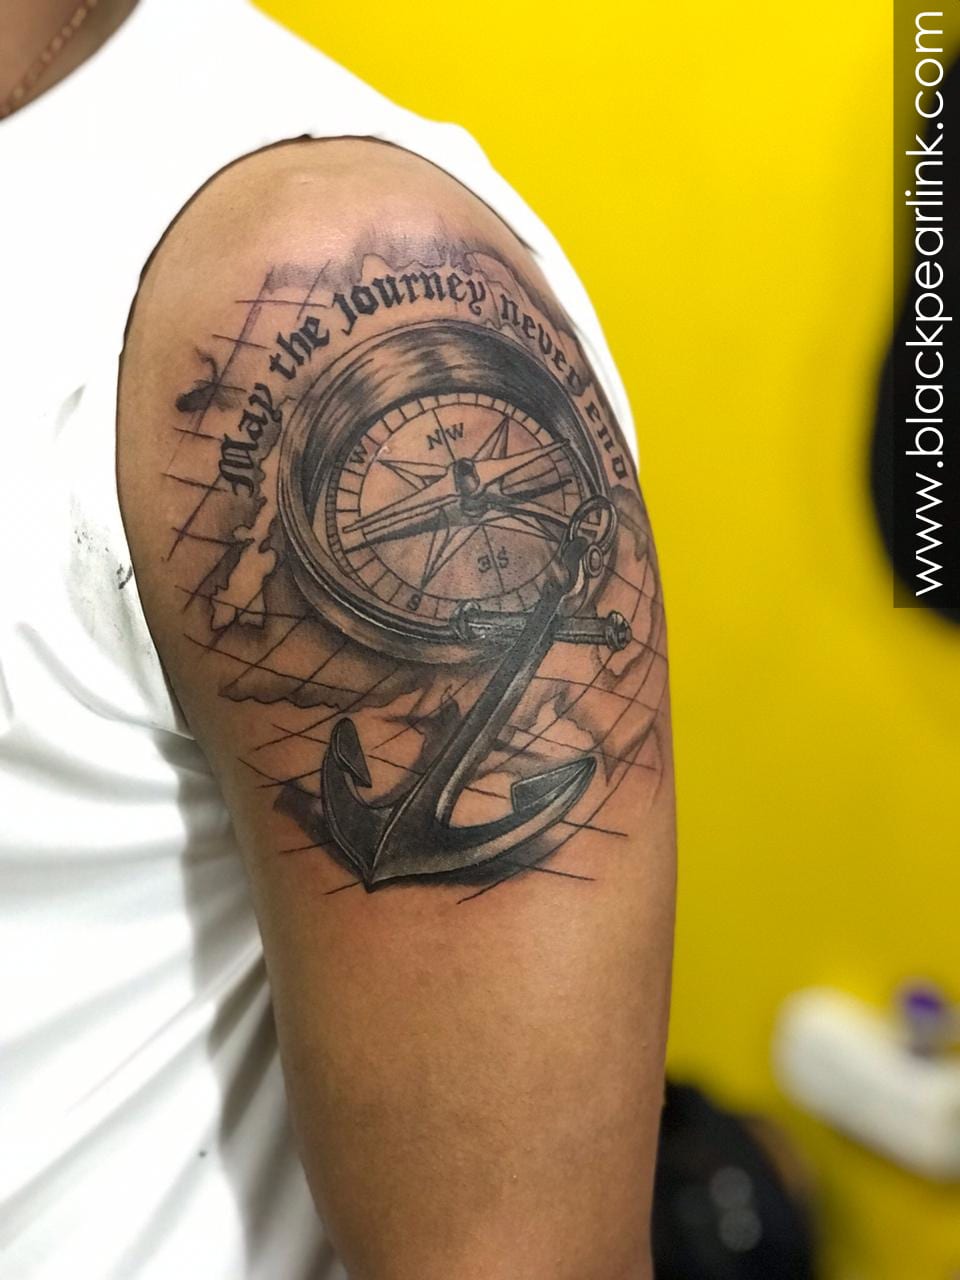 Compass | Compass tattoo, Compass tattoos arm, Compass tattoo forearm